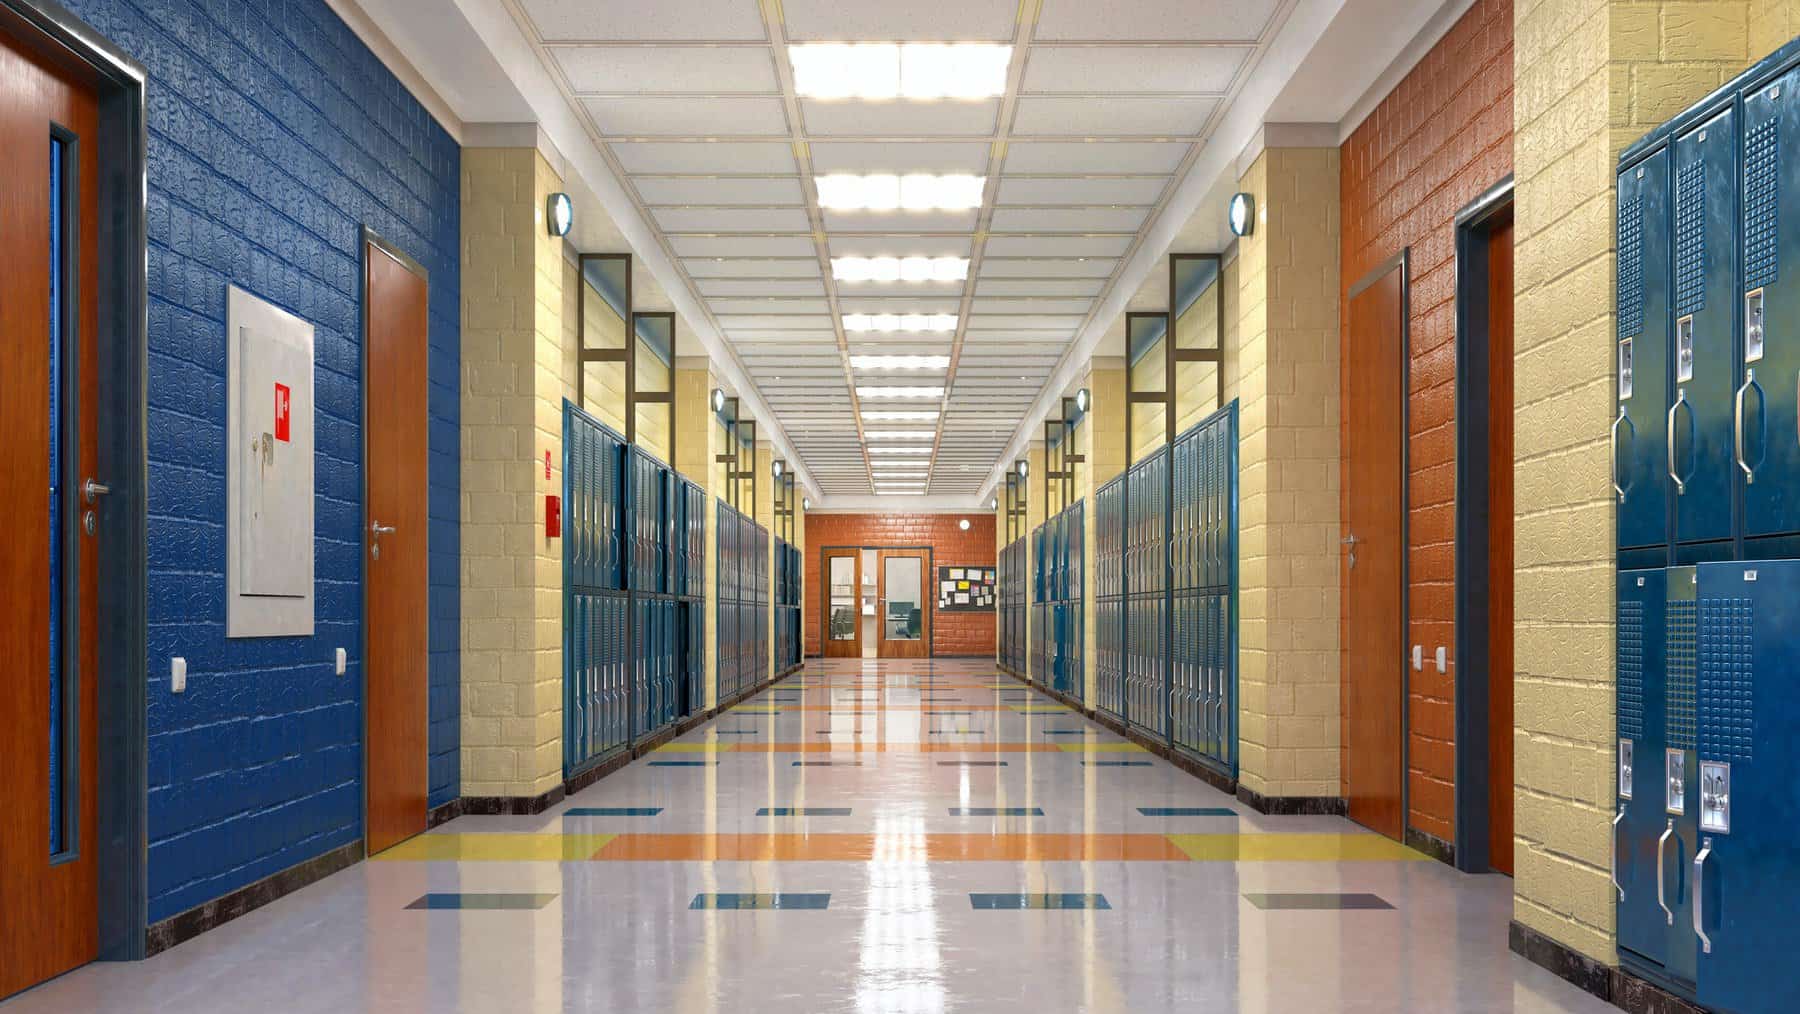 School hallway with lockers